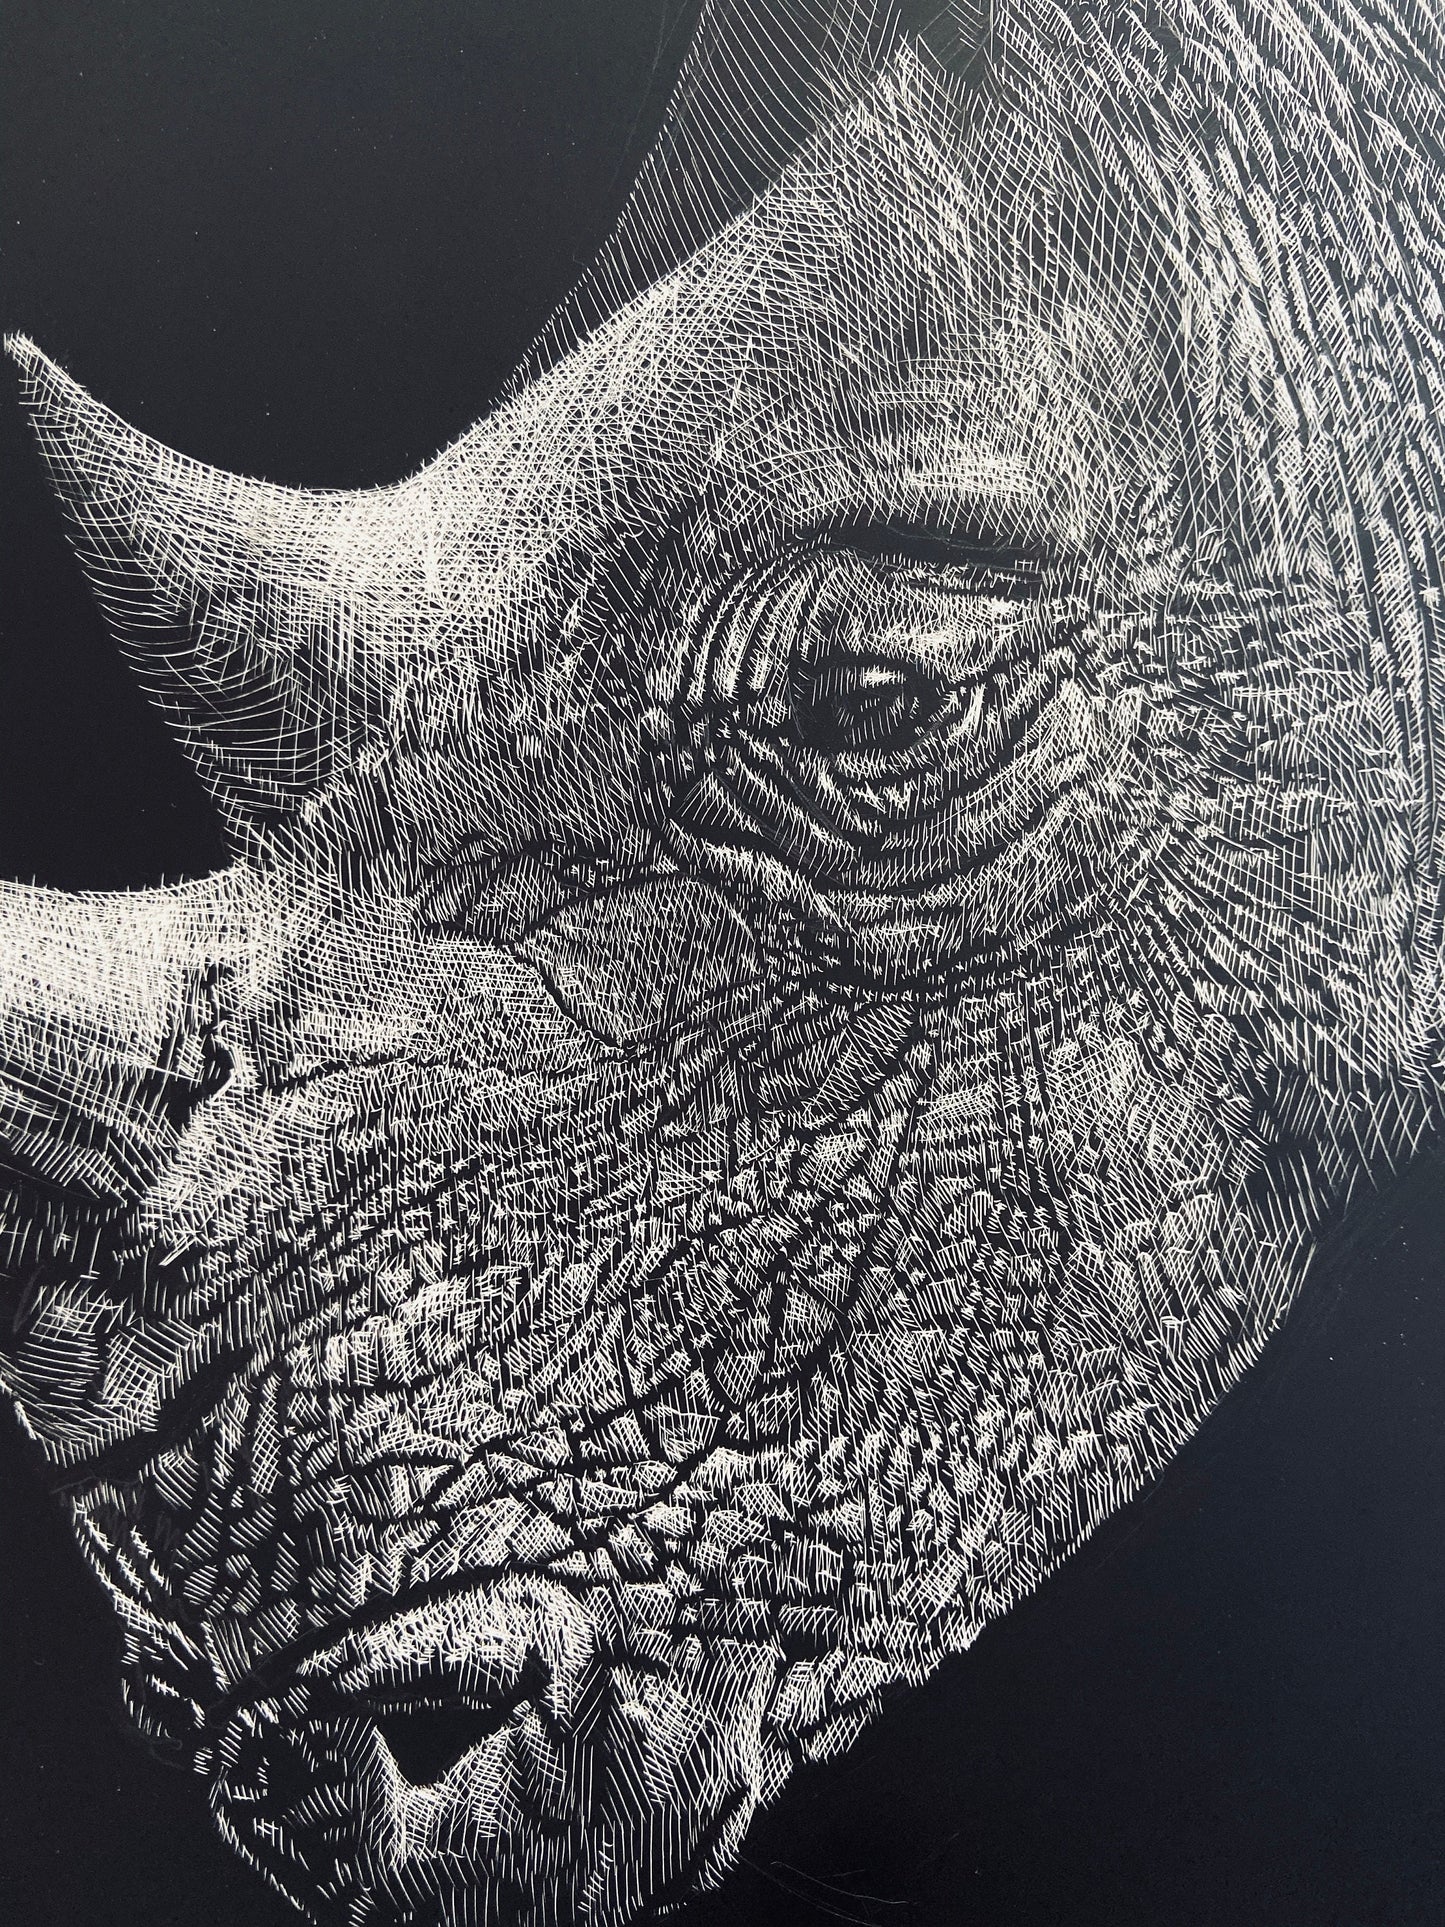 Rhino Etching - 18x24 giclee print